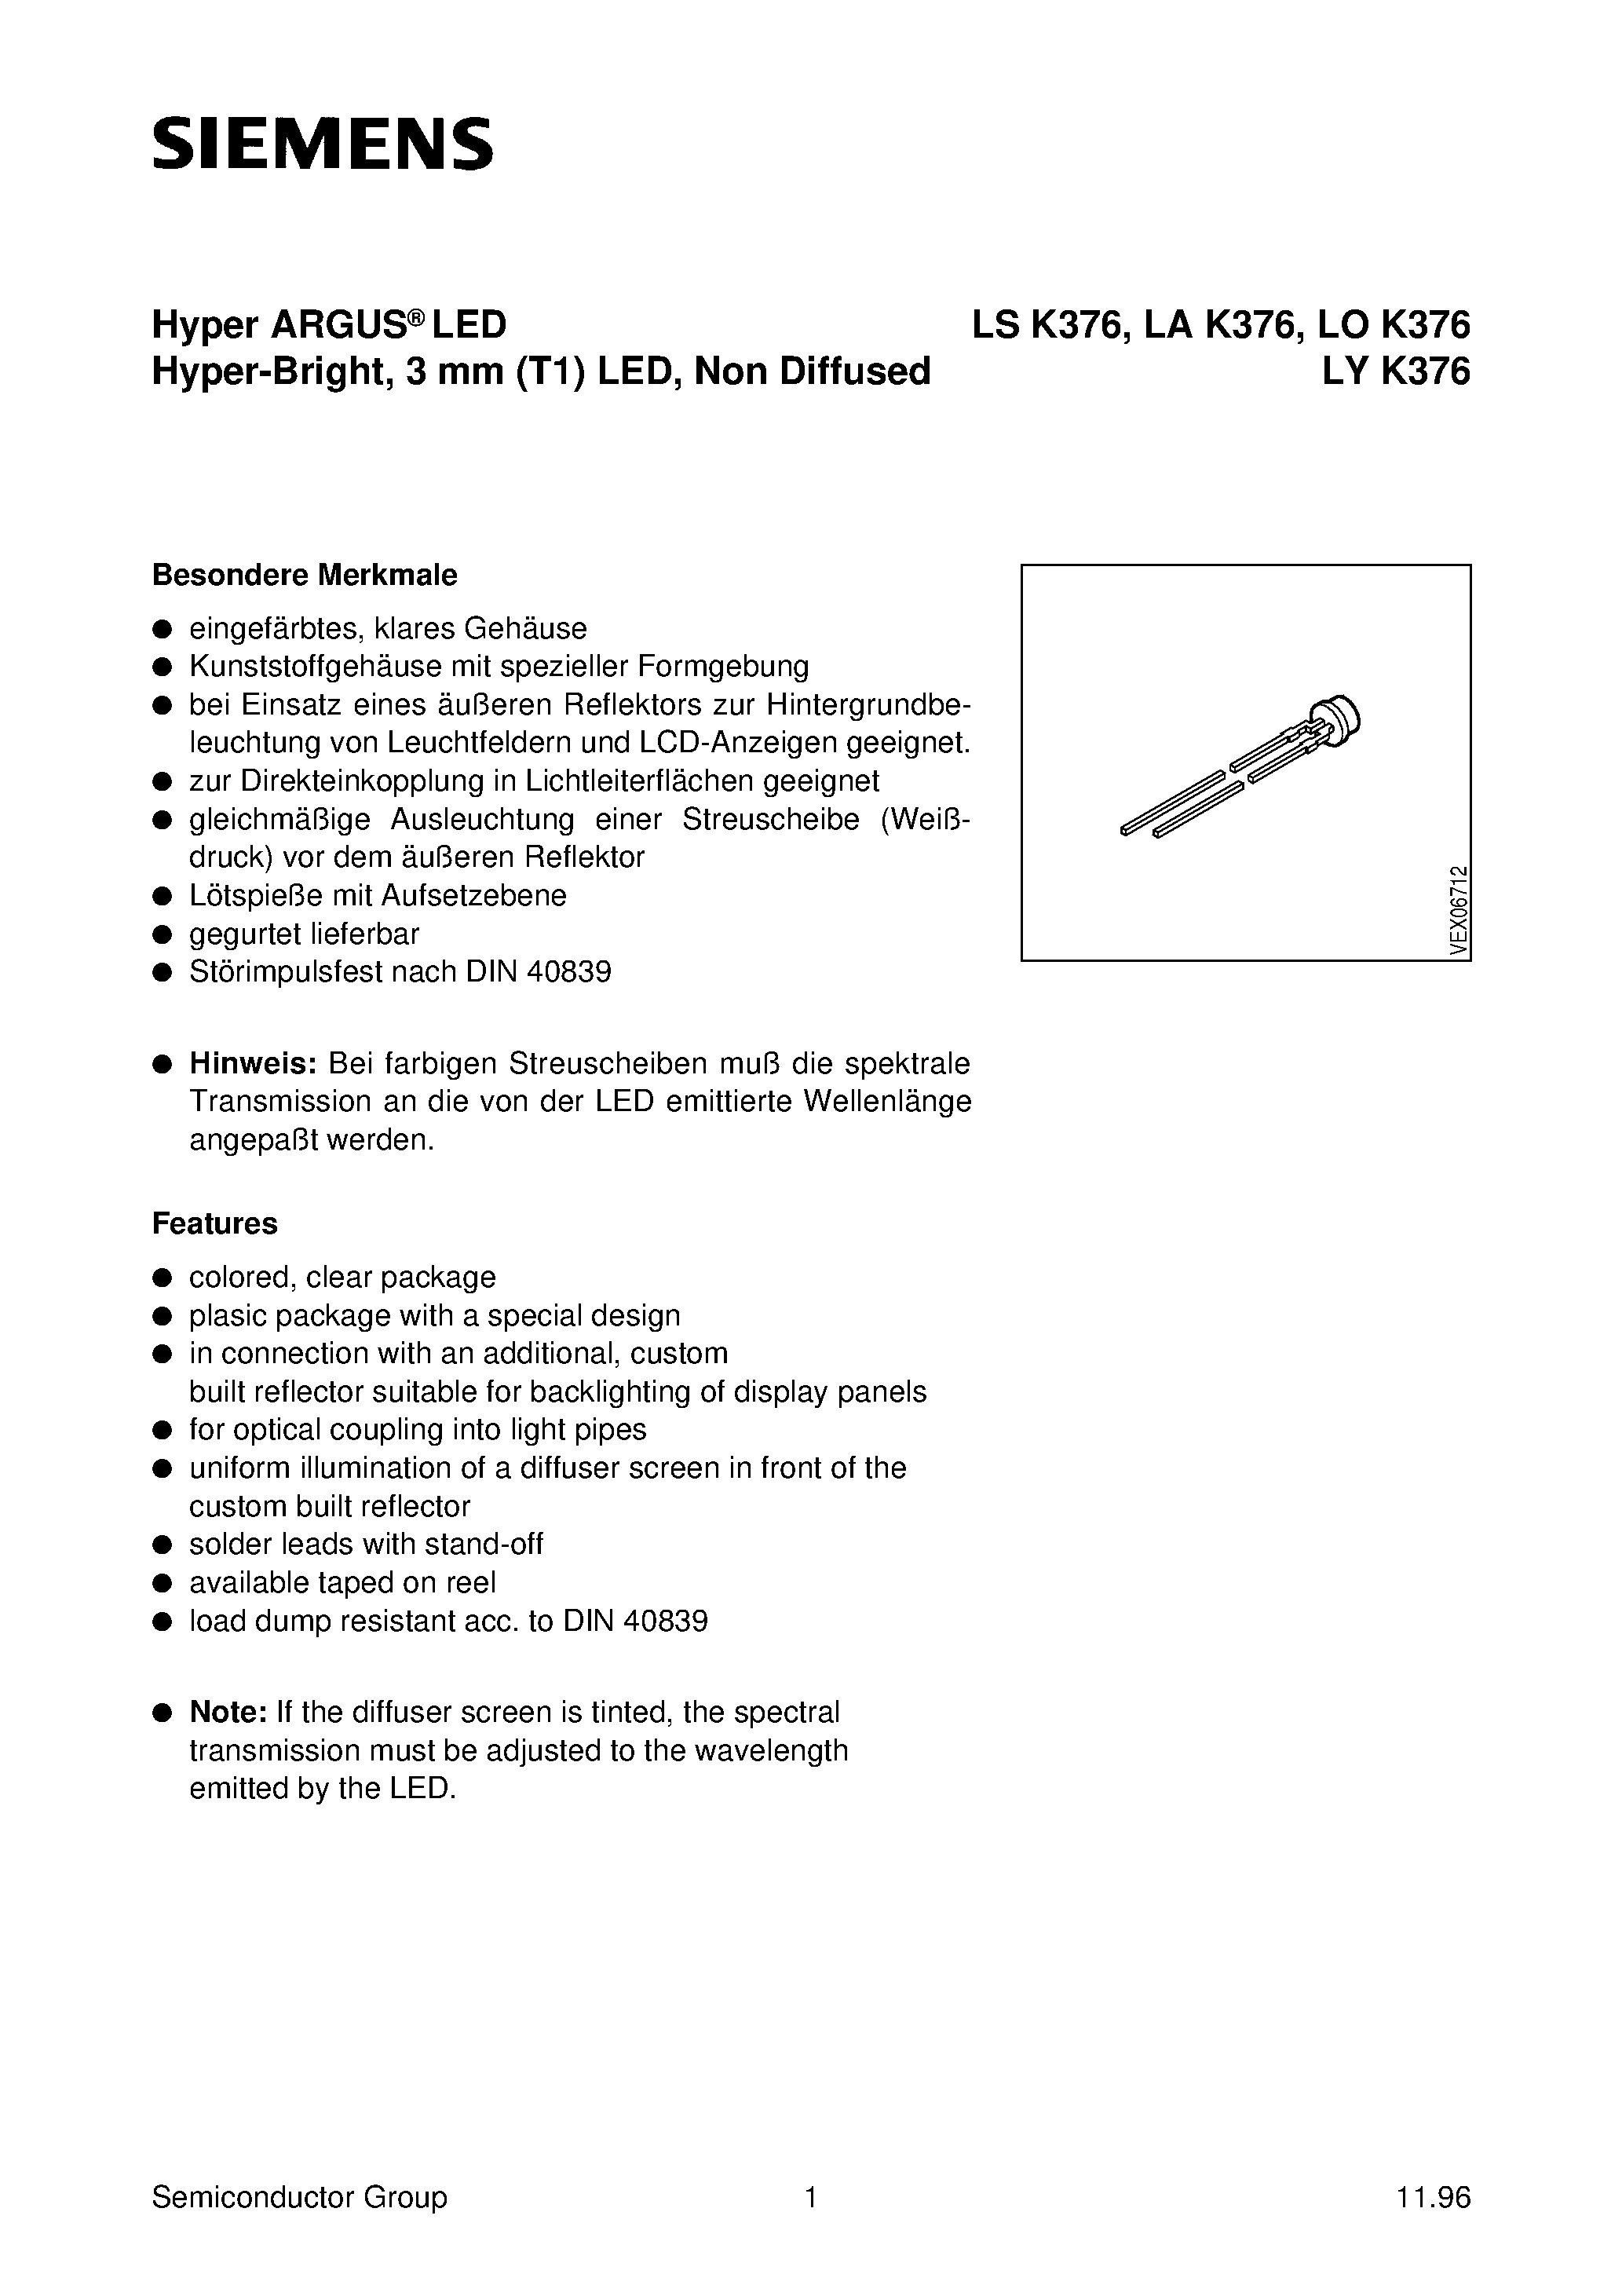 Datasheet LYK376-U - Hyper ARGUS LED Hyper-Bright/ 3 mm T1 LED/ Non Diffused page 1